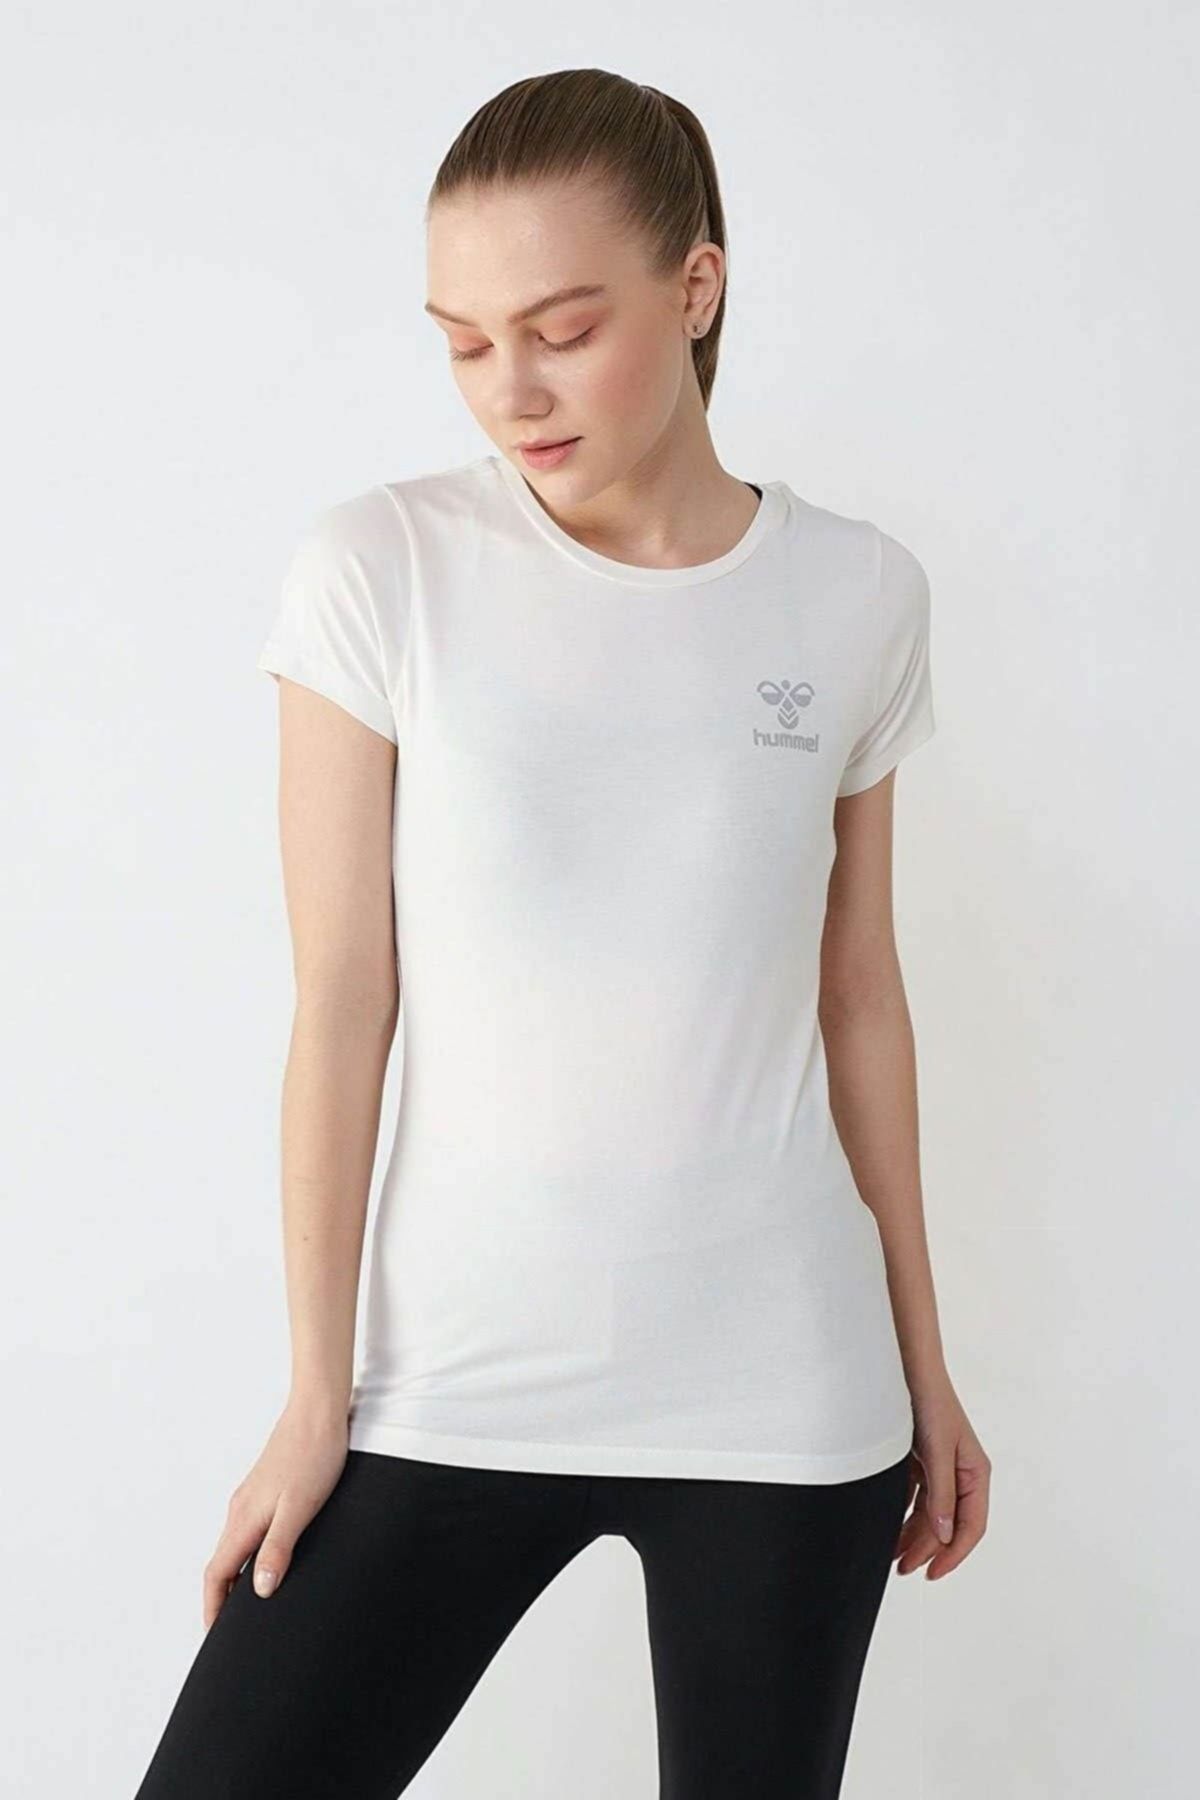 hummel Kadın Deni Beyaz T-shirt 911306-9003